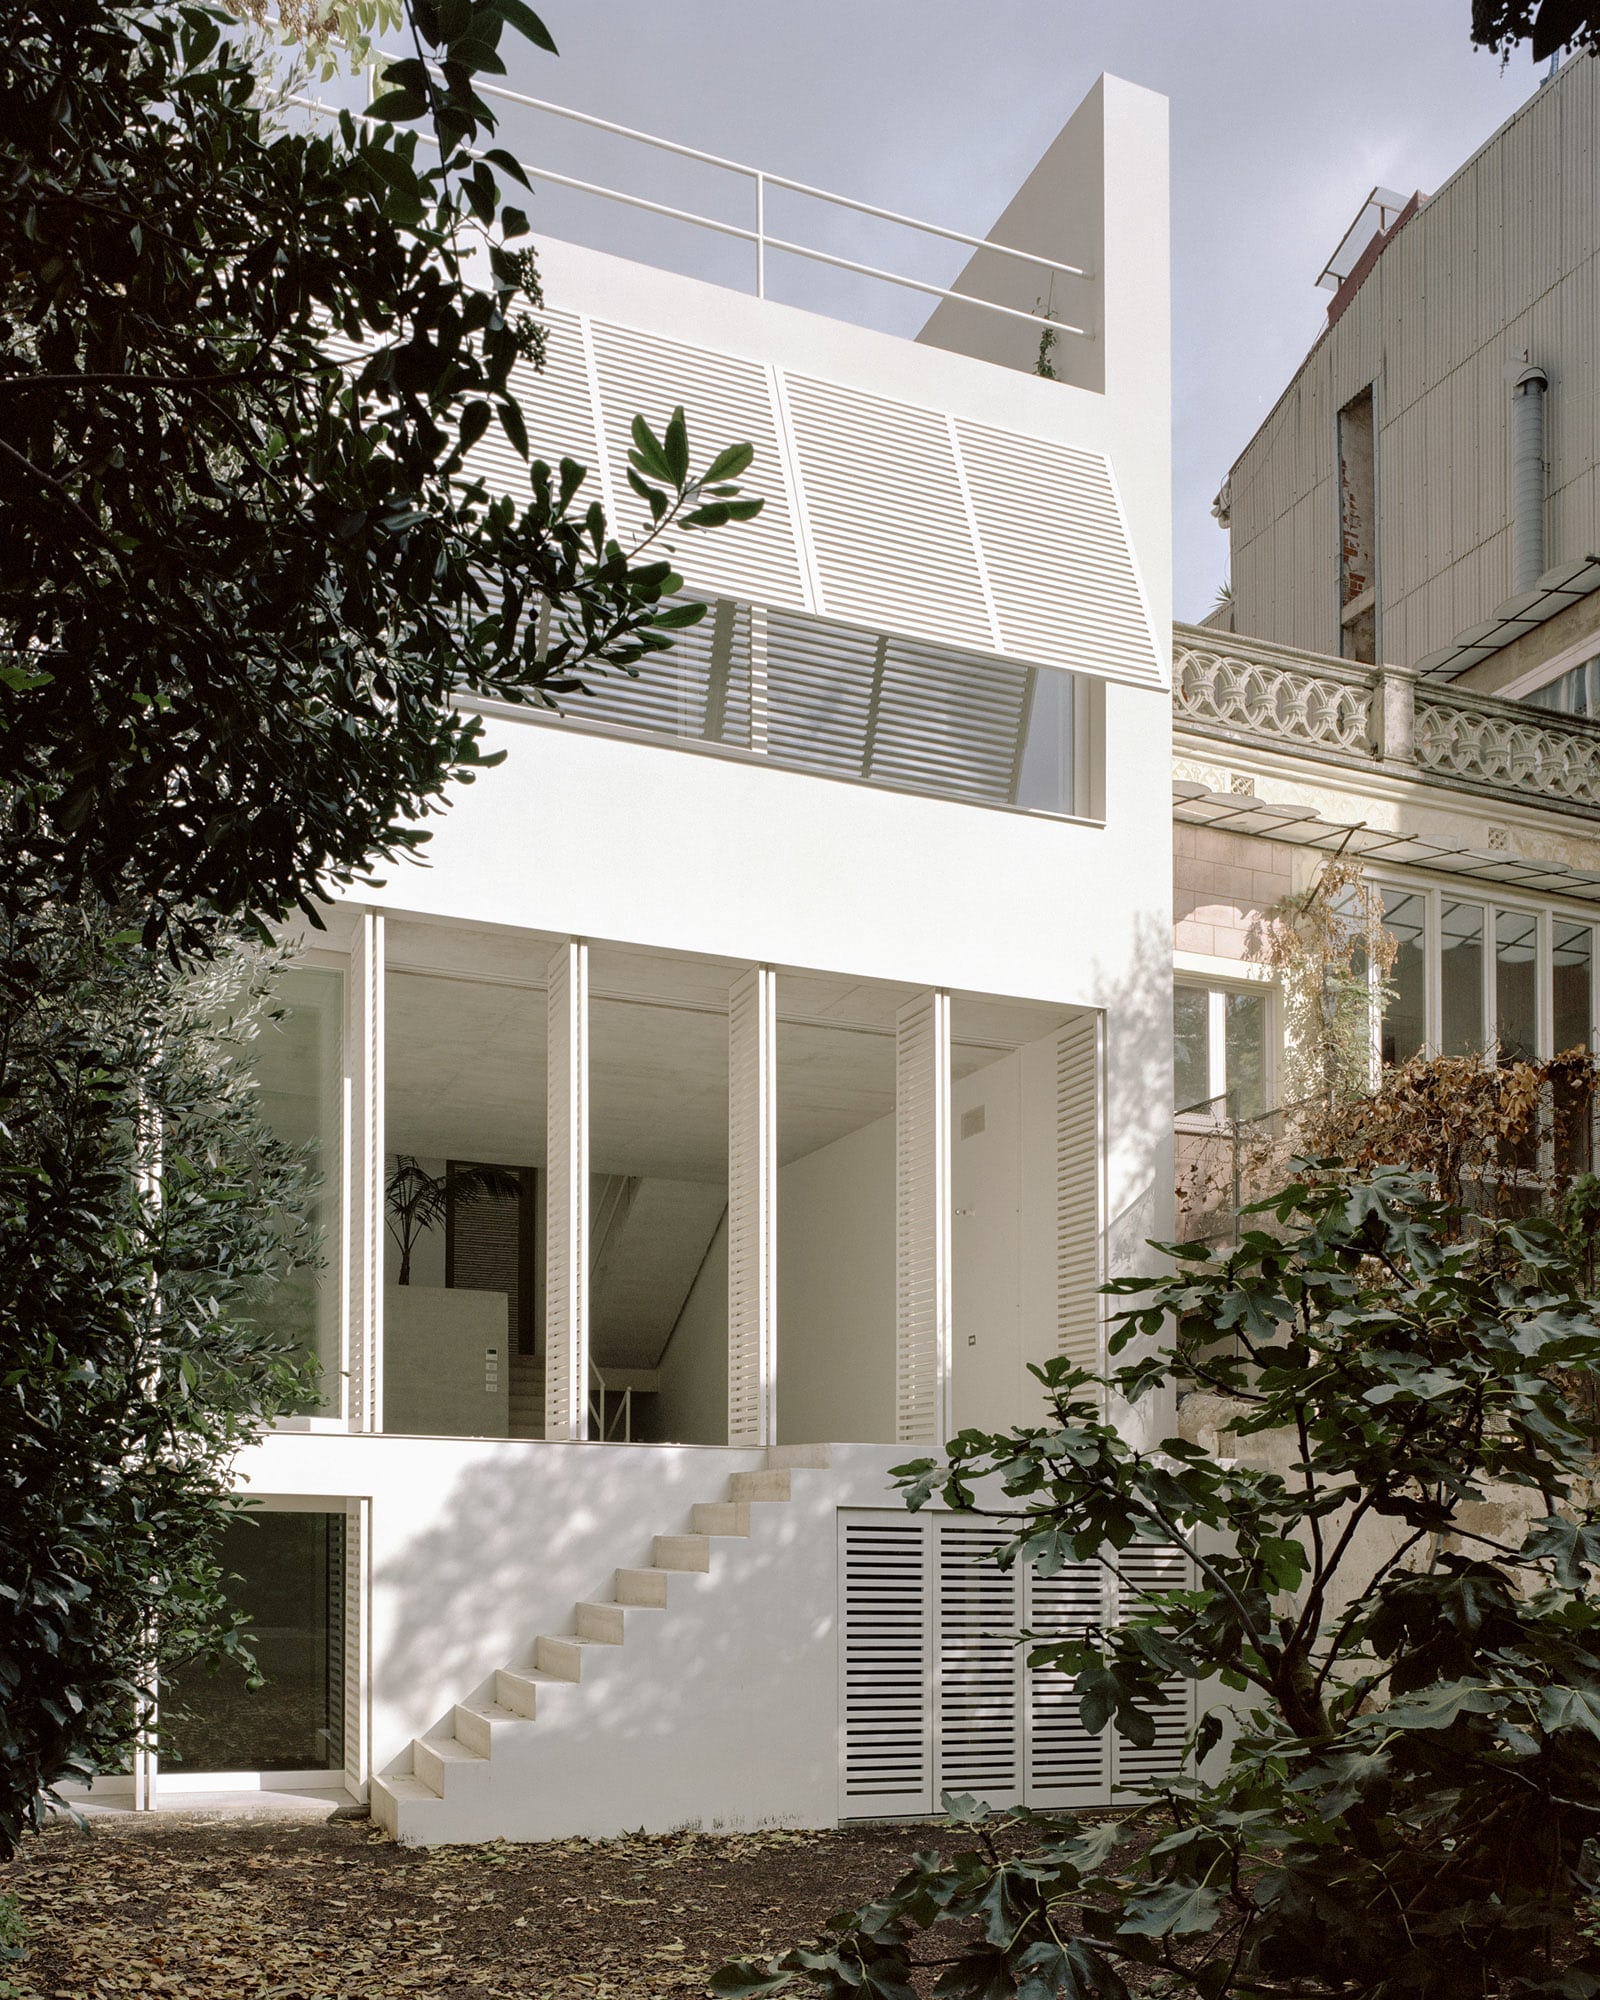 Image of 20220211 ArquitecturaG VerdiHouse 02 1 in Verdi House - Cosentino